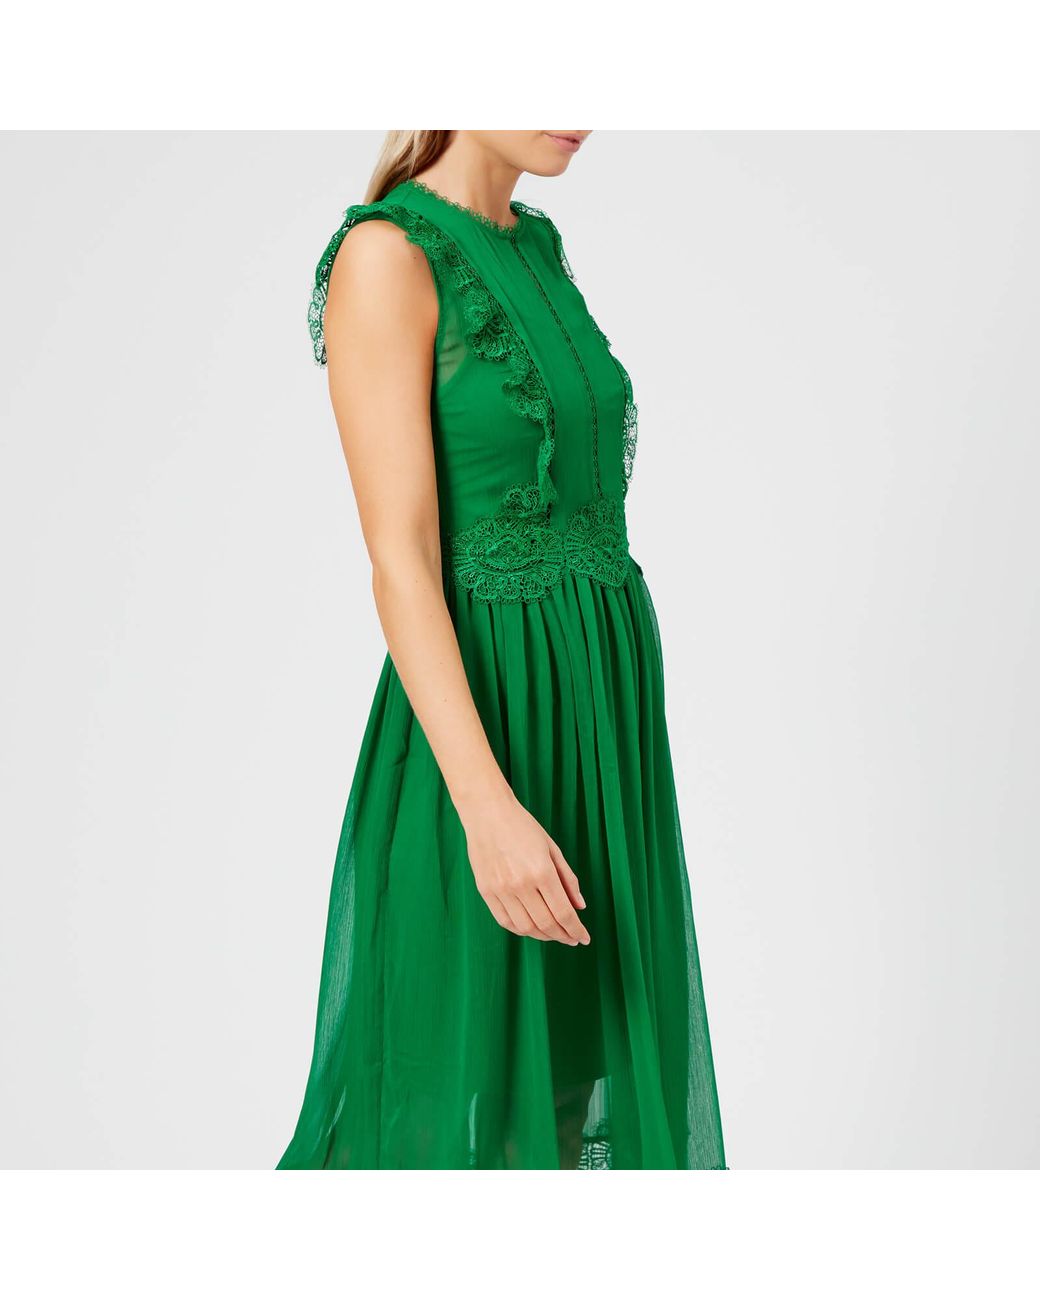 Ted Baker Porrla Frill Lace Midi Dress in Green | Lyst